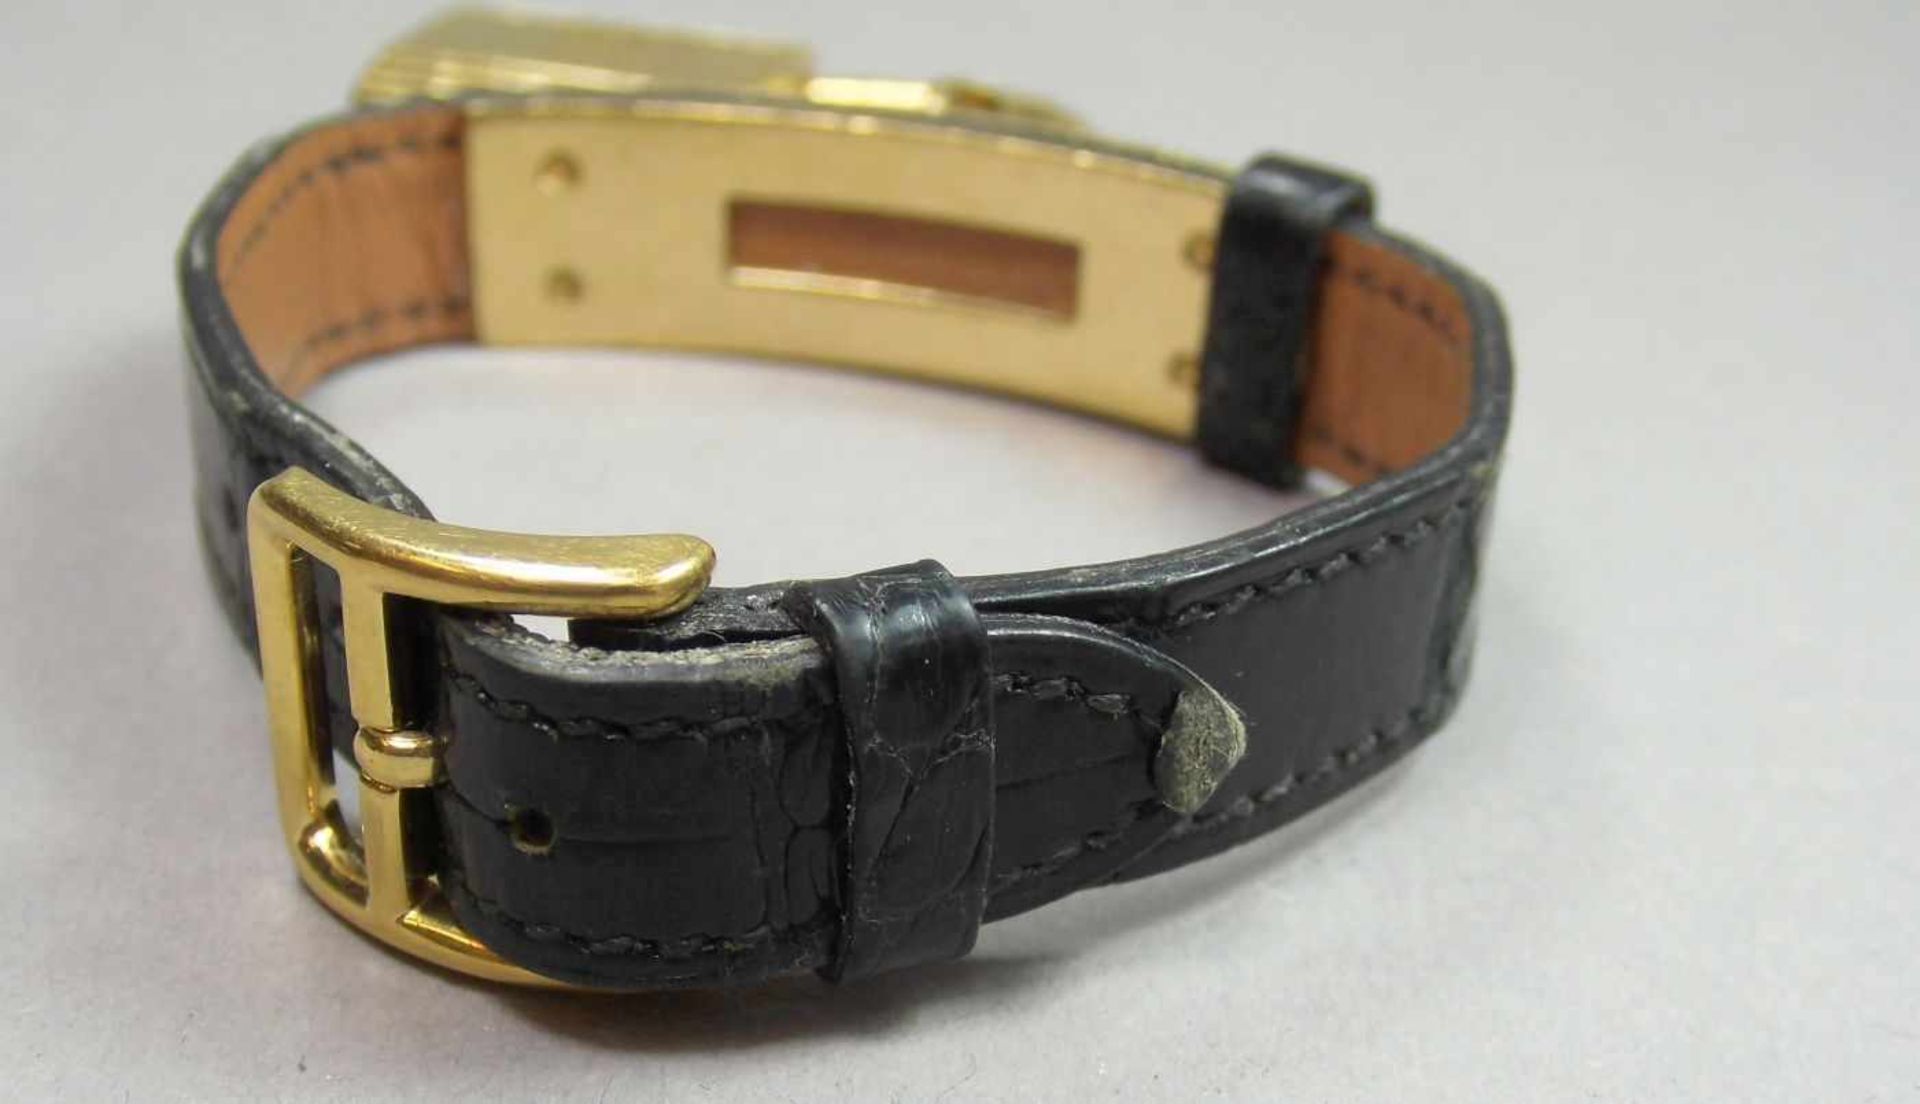 HERMES VINTAGE DAMEN-ARMBANDUHR "KELLY WATCH" / wristwatch, mit originalem Hermes Lederarmband. - Bild 4 aus 6